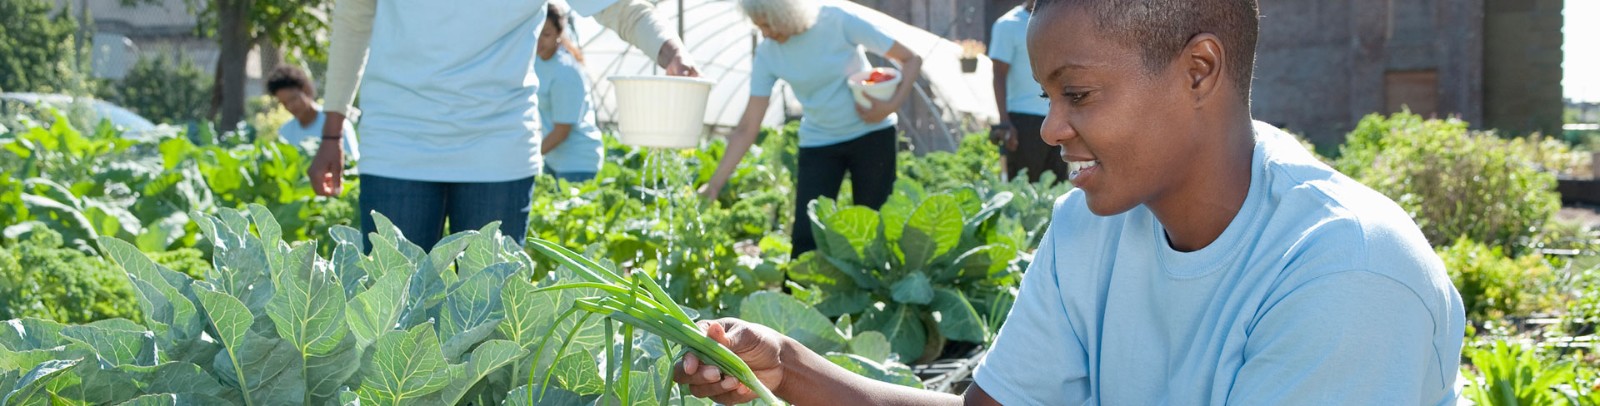 Black woman tending to garden